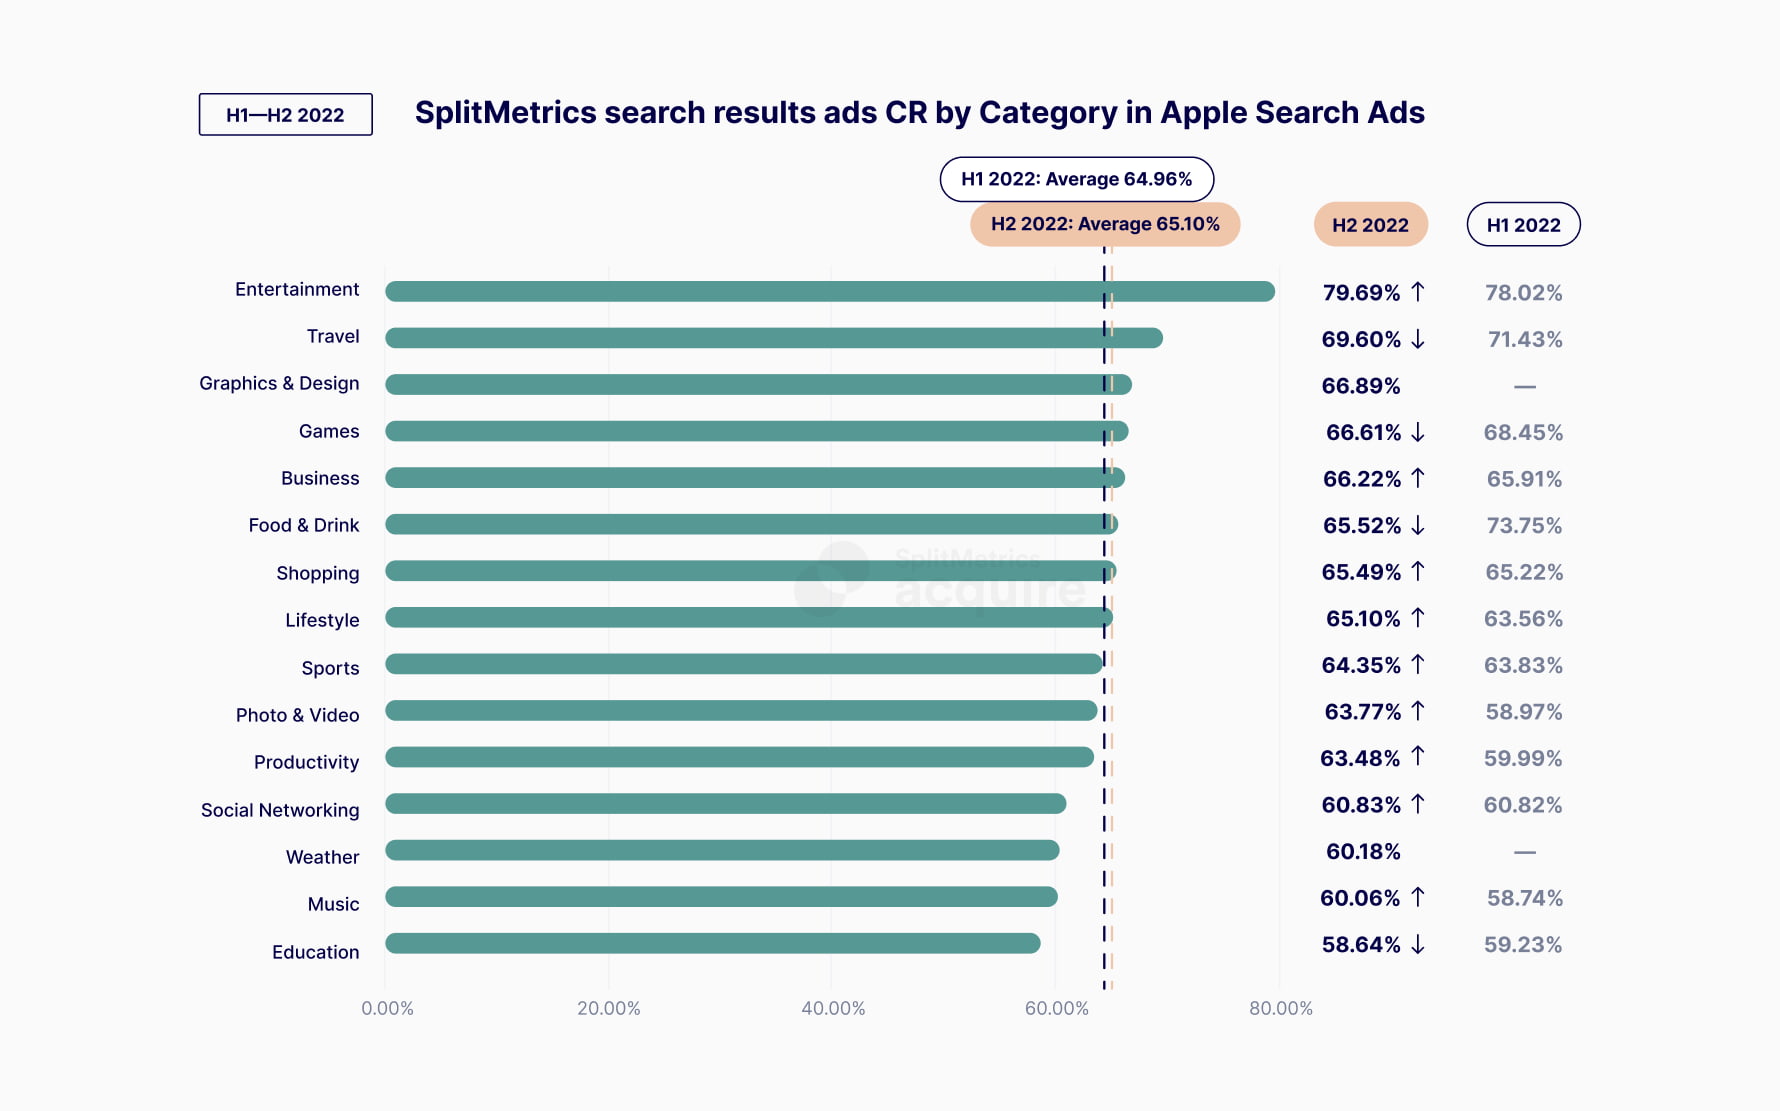 SplitMetrics search results ads CVR by category in Apple Search Ads, a chart from the SplitMetrics Apple Search Ads Benchmark Dashboard.